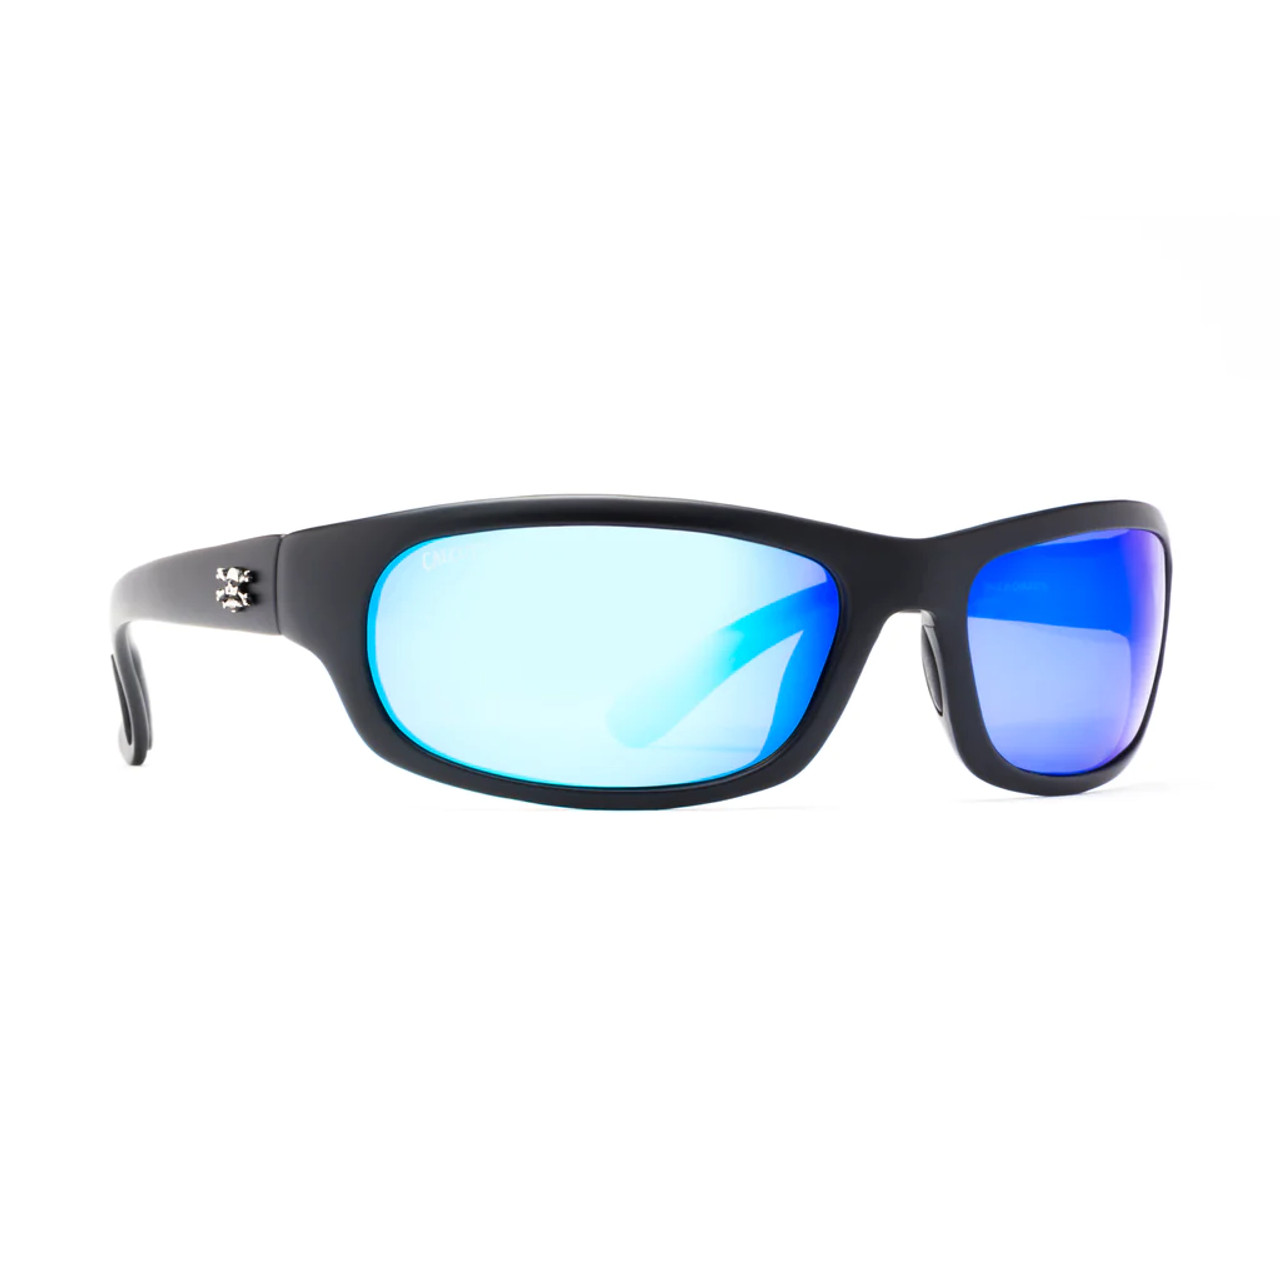 Calcutta Steelhead Sunglasses Matte Black Frame/Blue Mirror Lens 63mm Lens